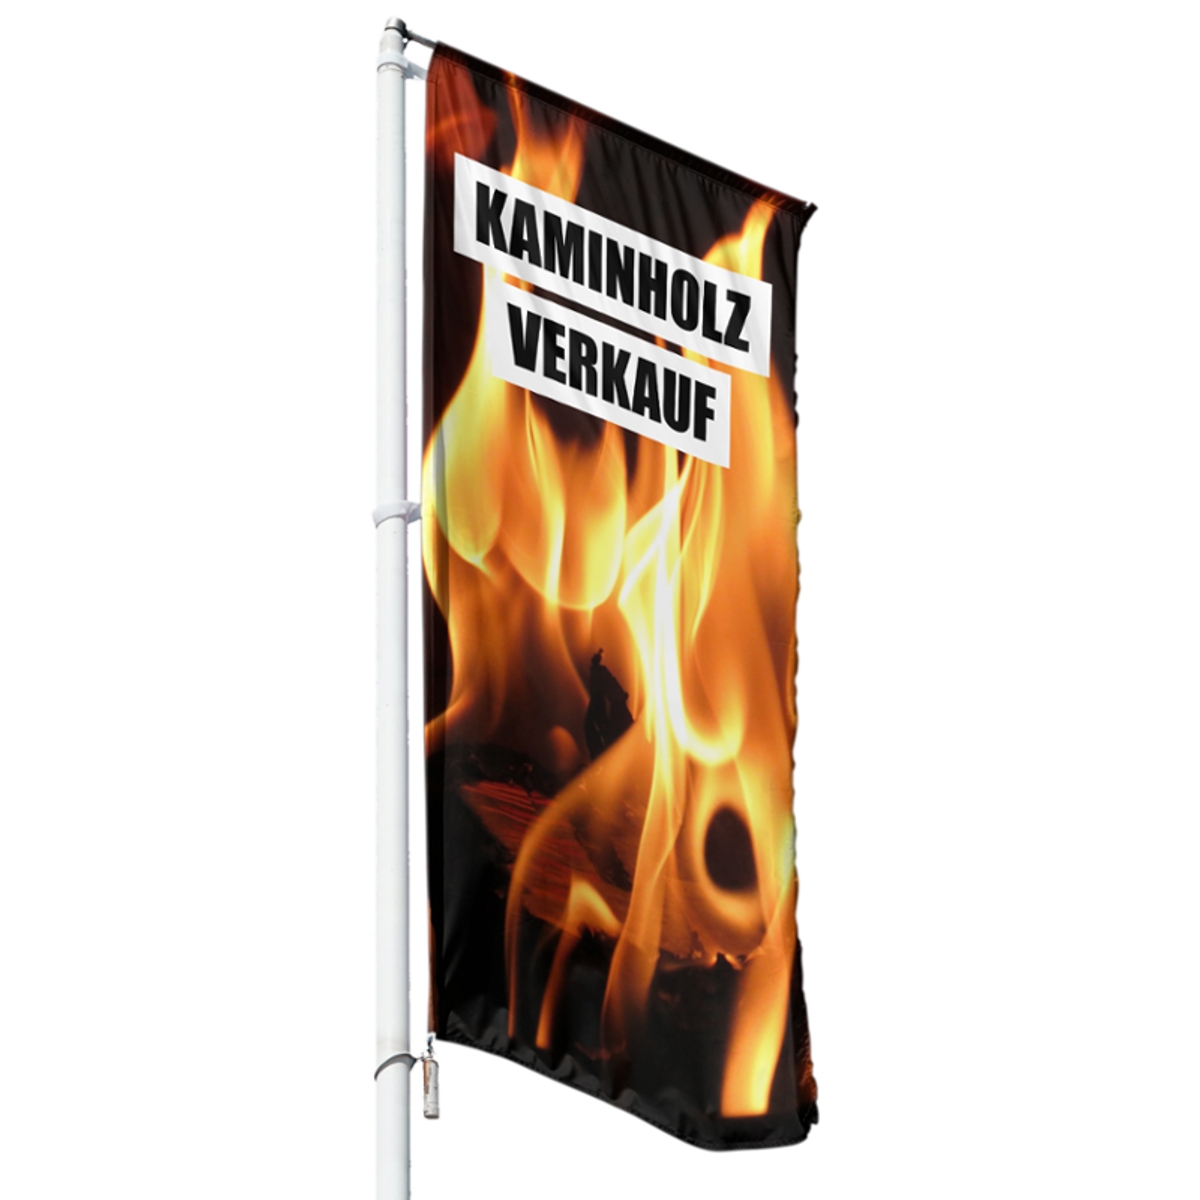 Kaminholz Verkauf Hissflagge, Fahne im Wunschformat (2313)